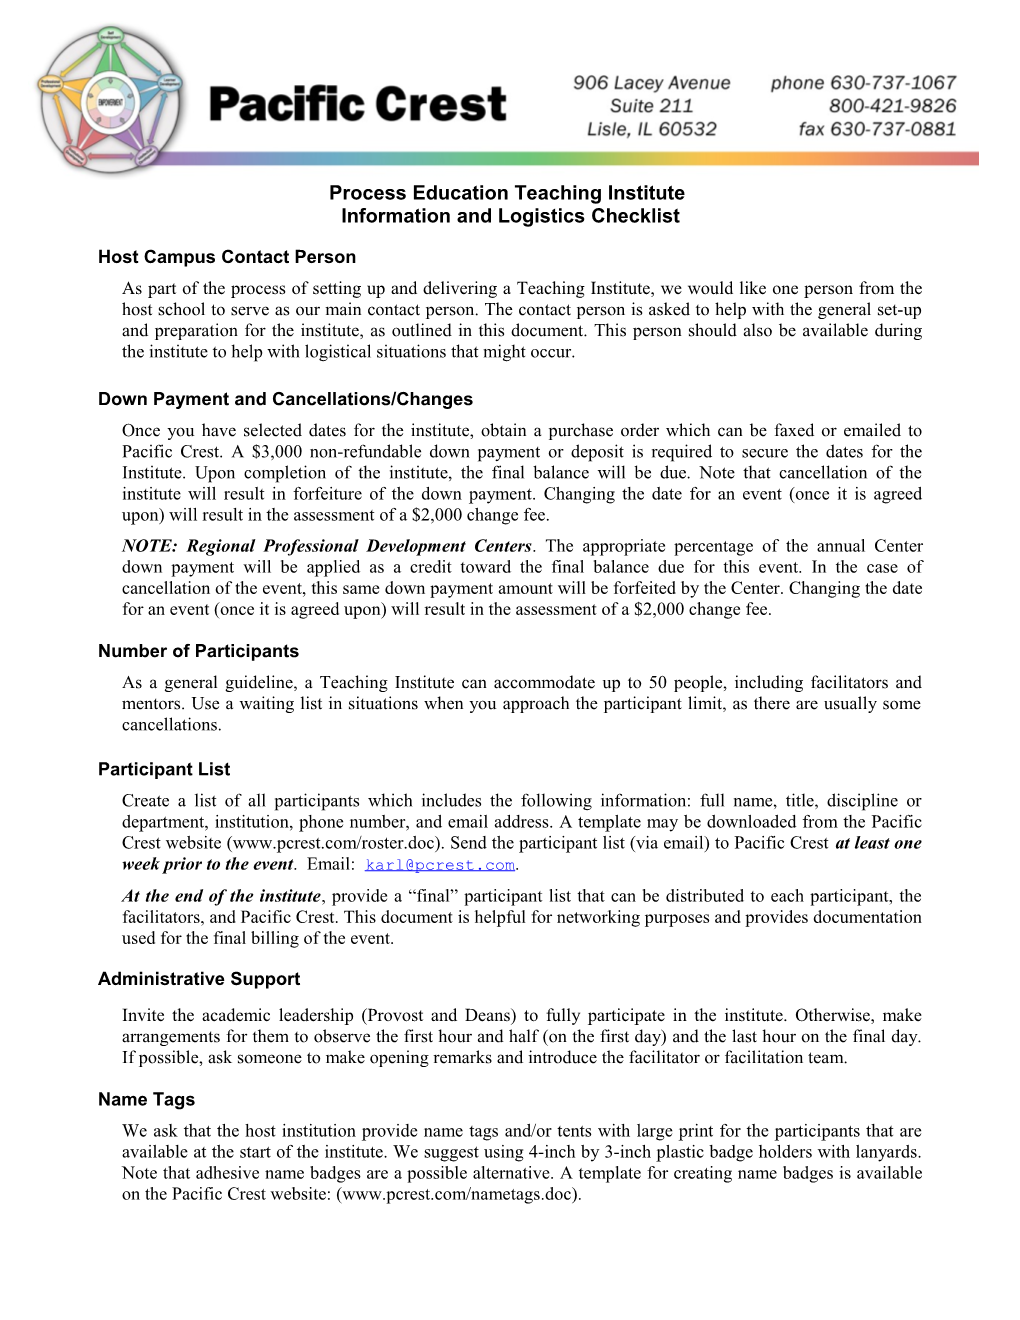 Pacific Crest Process Education Teaching Institute